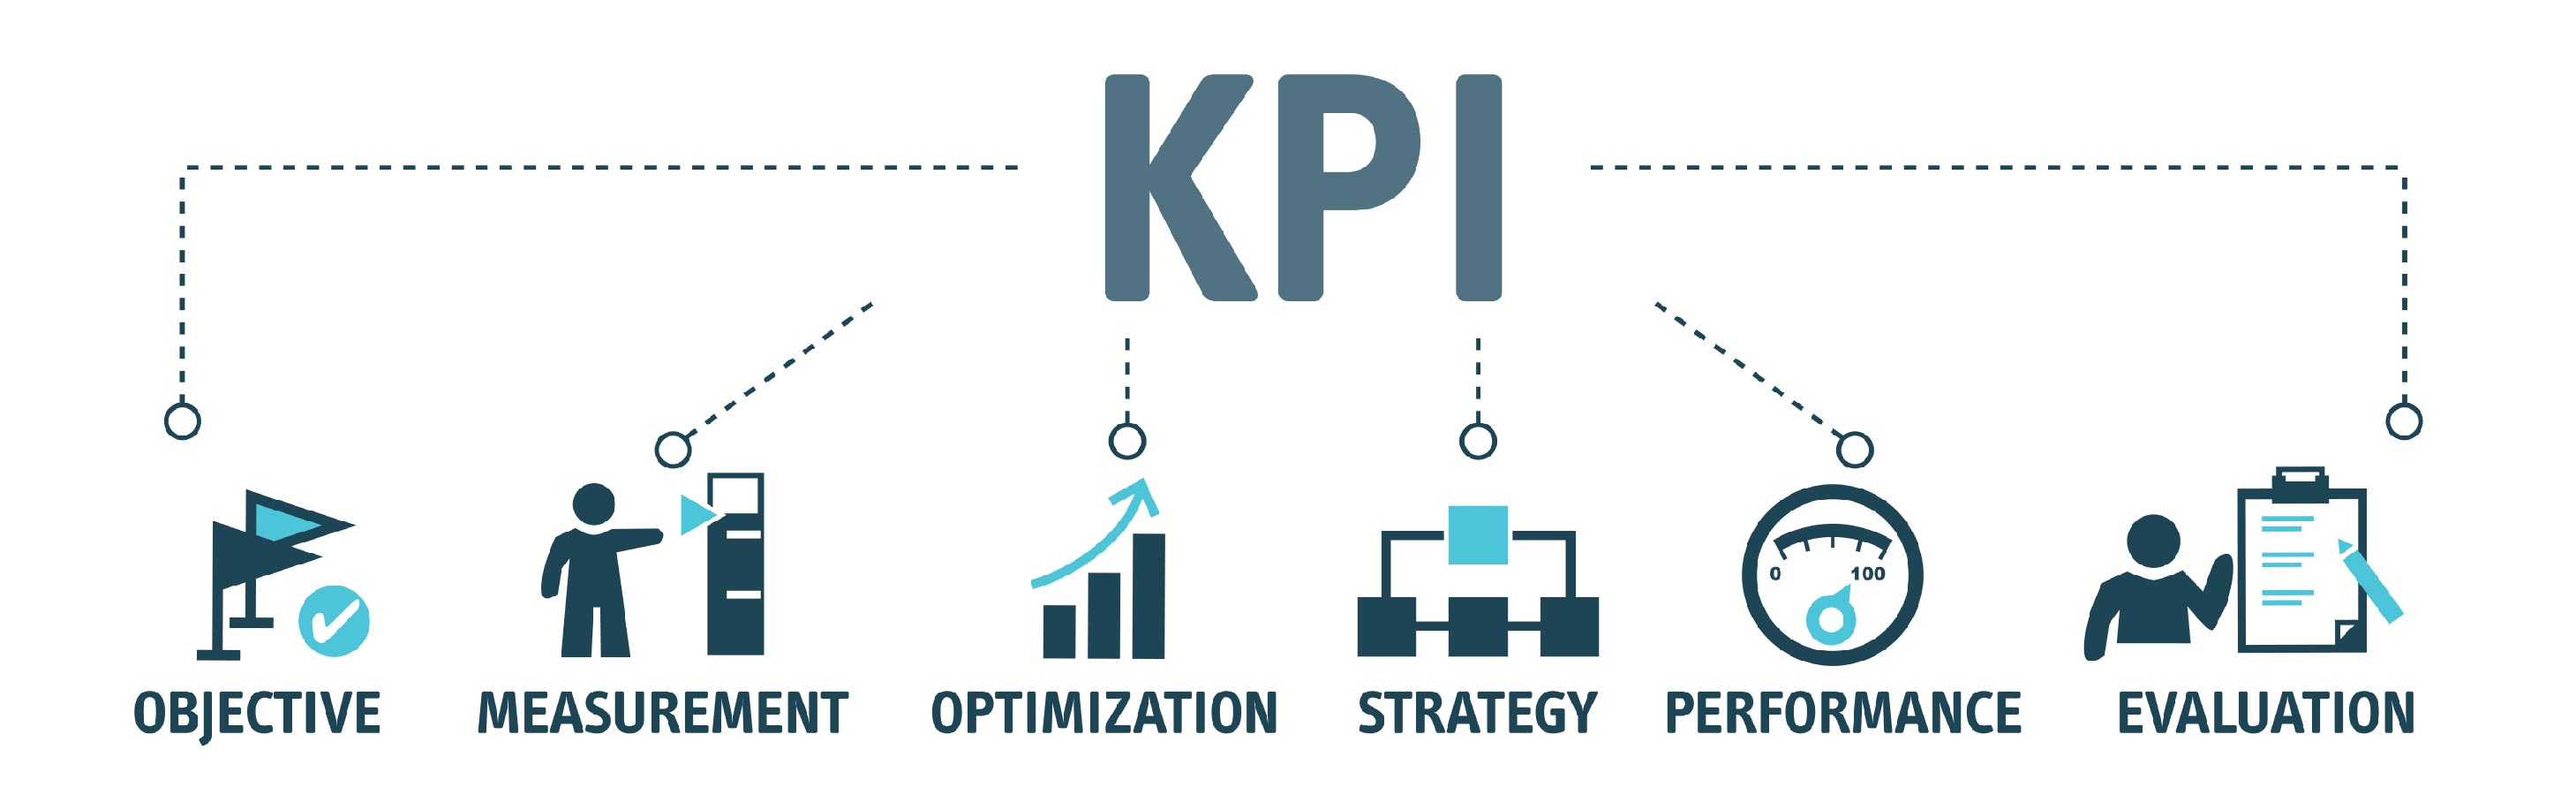 Digital marketing KPI